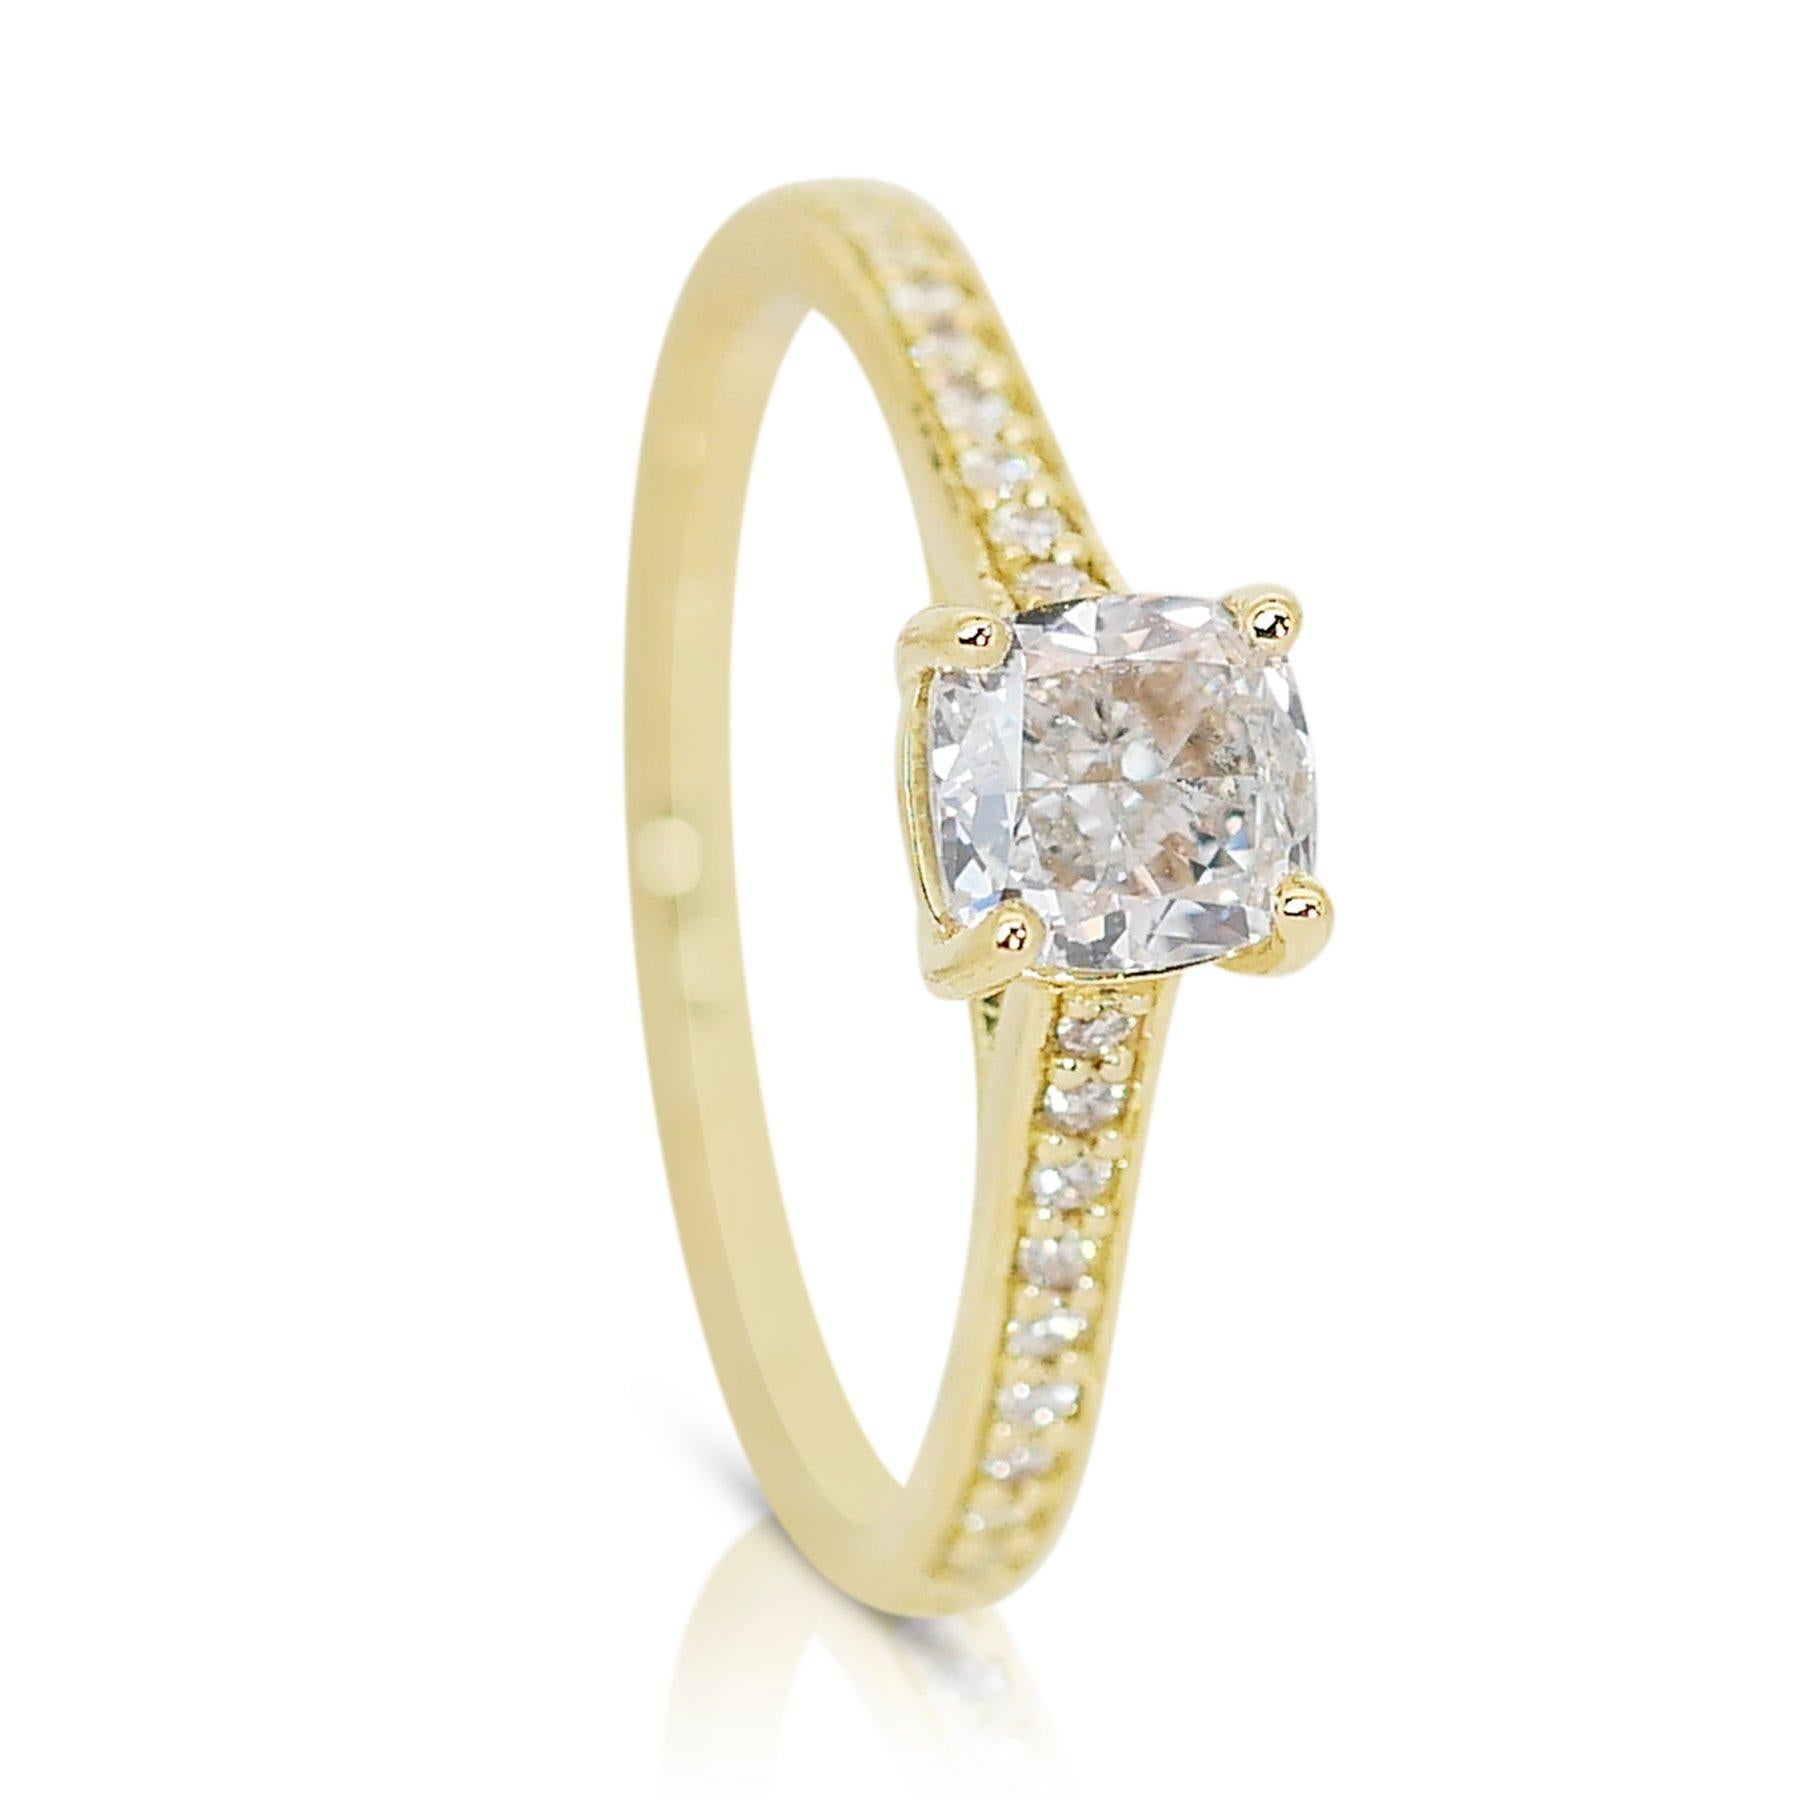 Cushion Cut Luminous 1.17ct Diamond Pave Ring in 18k Yellow Gold – GIA Certified